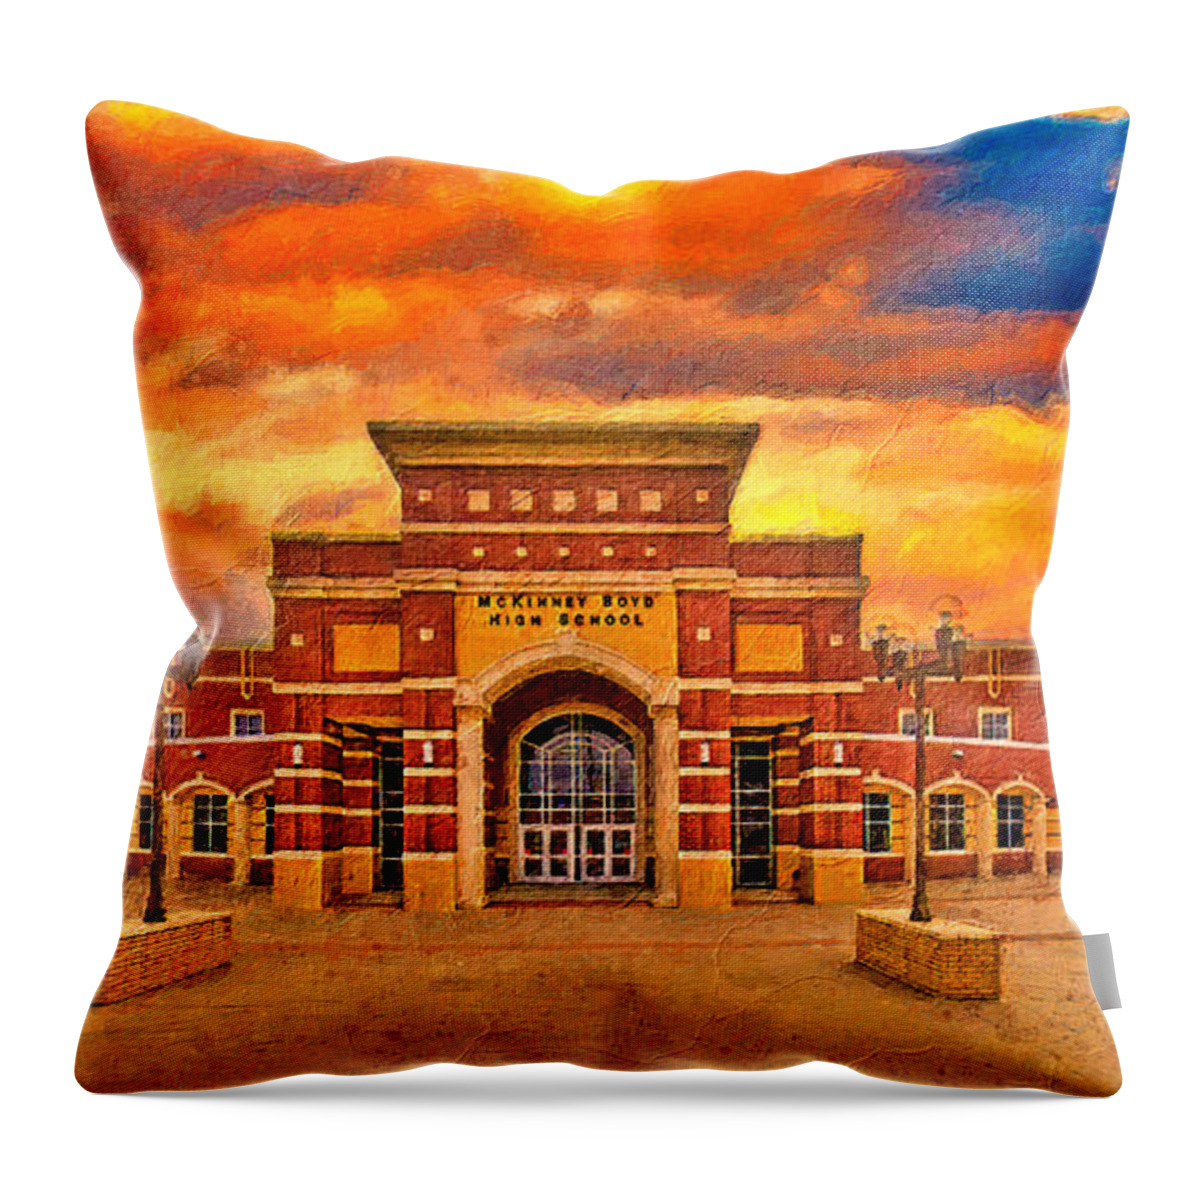 Mckinney Boyd High School Throw Pillow featuring the digital art McKinney Boyd High School at sunset - digital painting by Nicko Prints